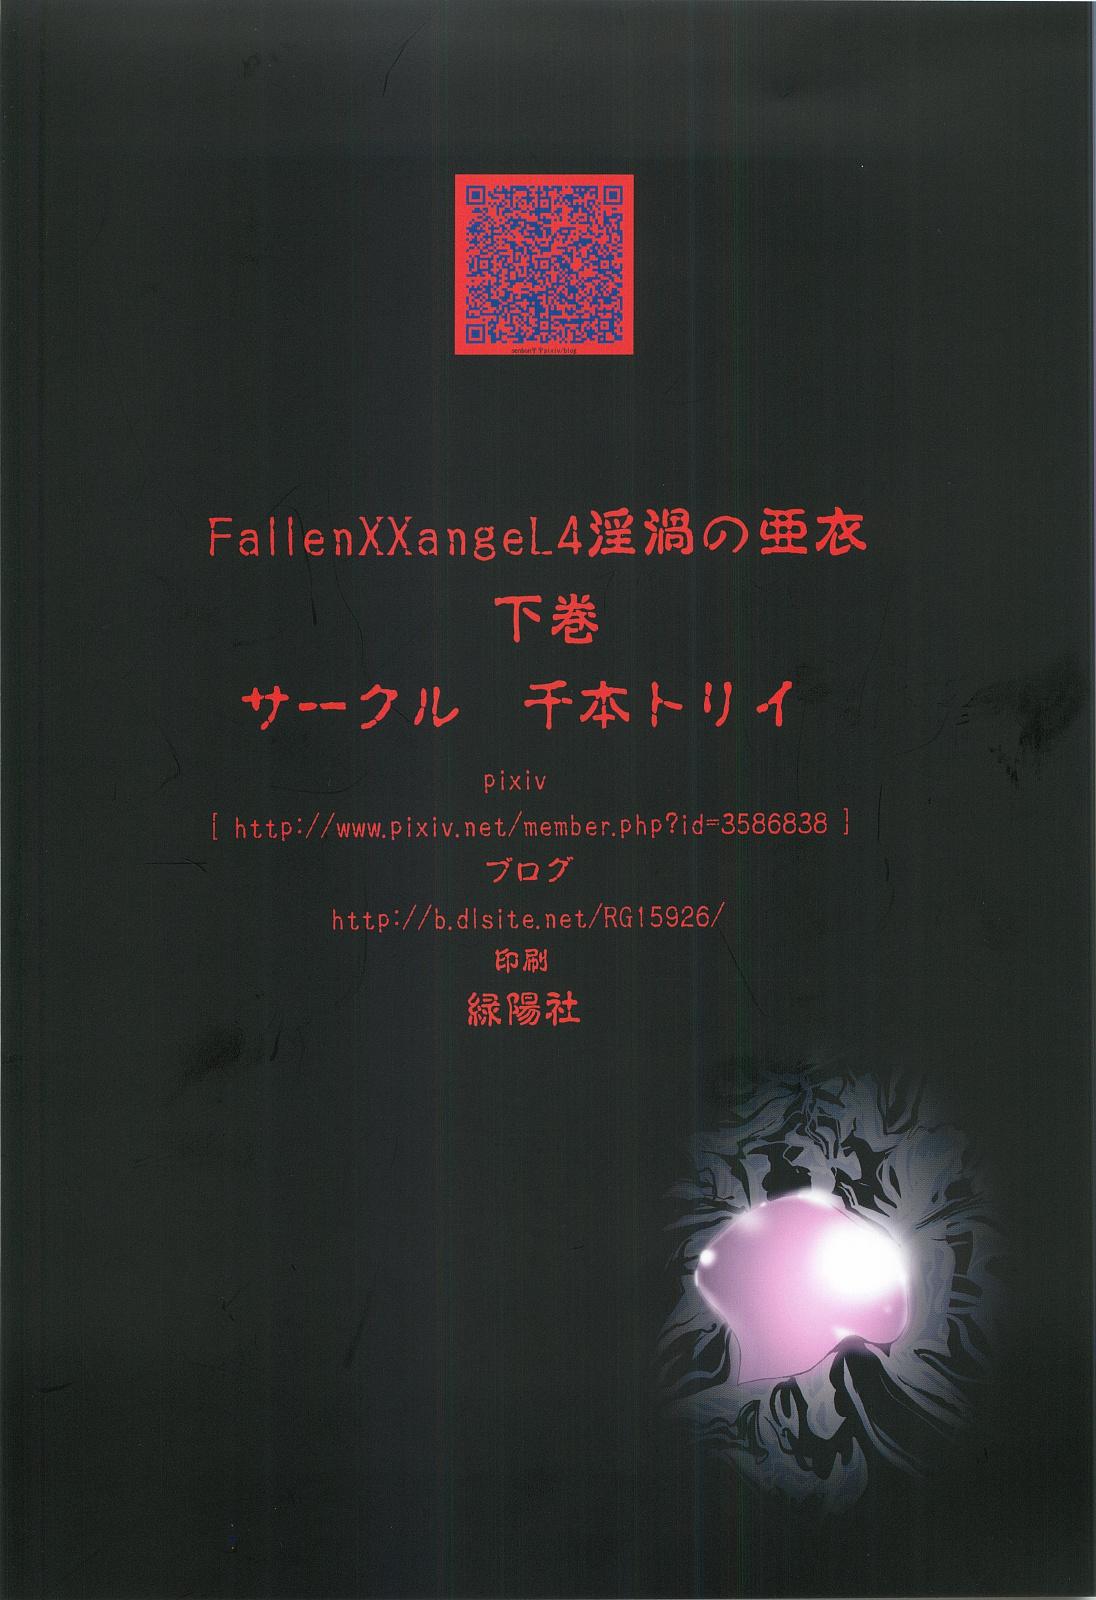 FallenXXangeL4 Inka no Ai Gekan 39